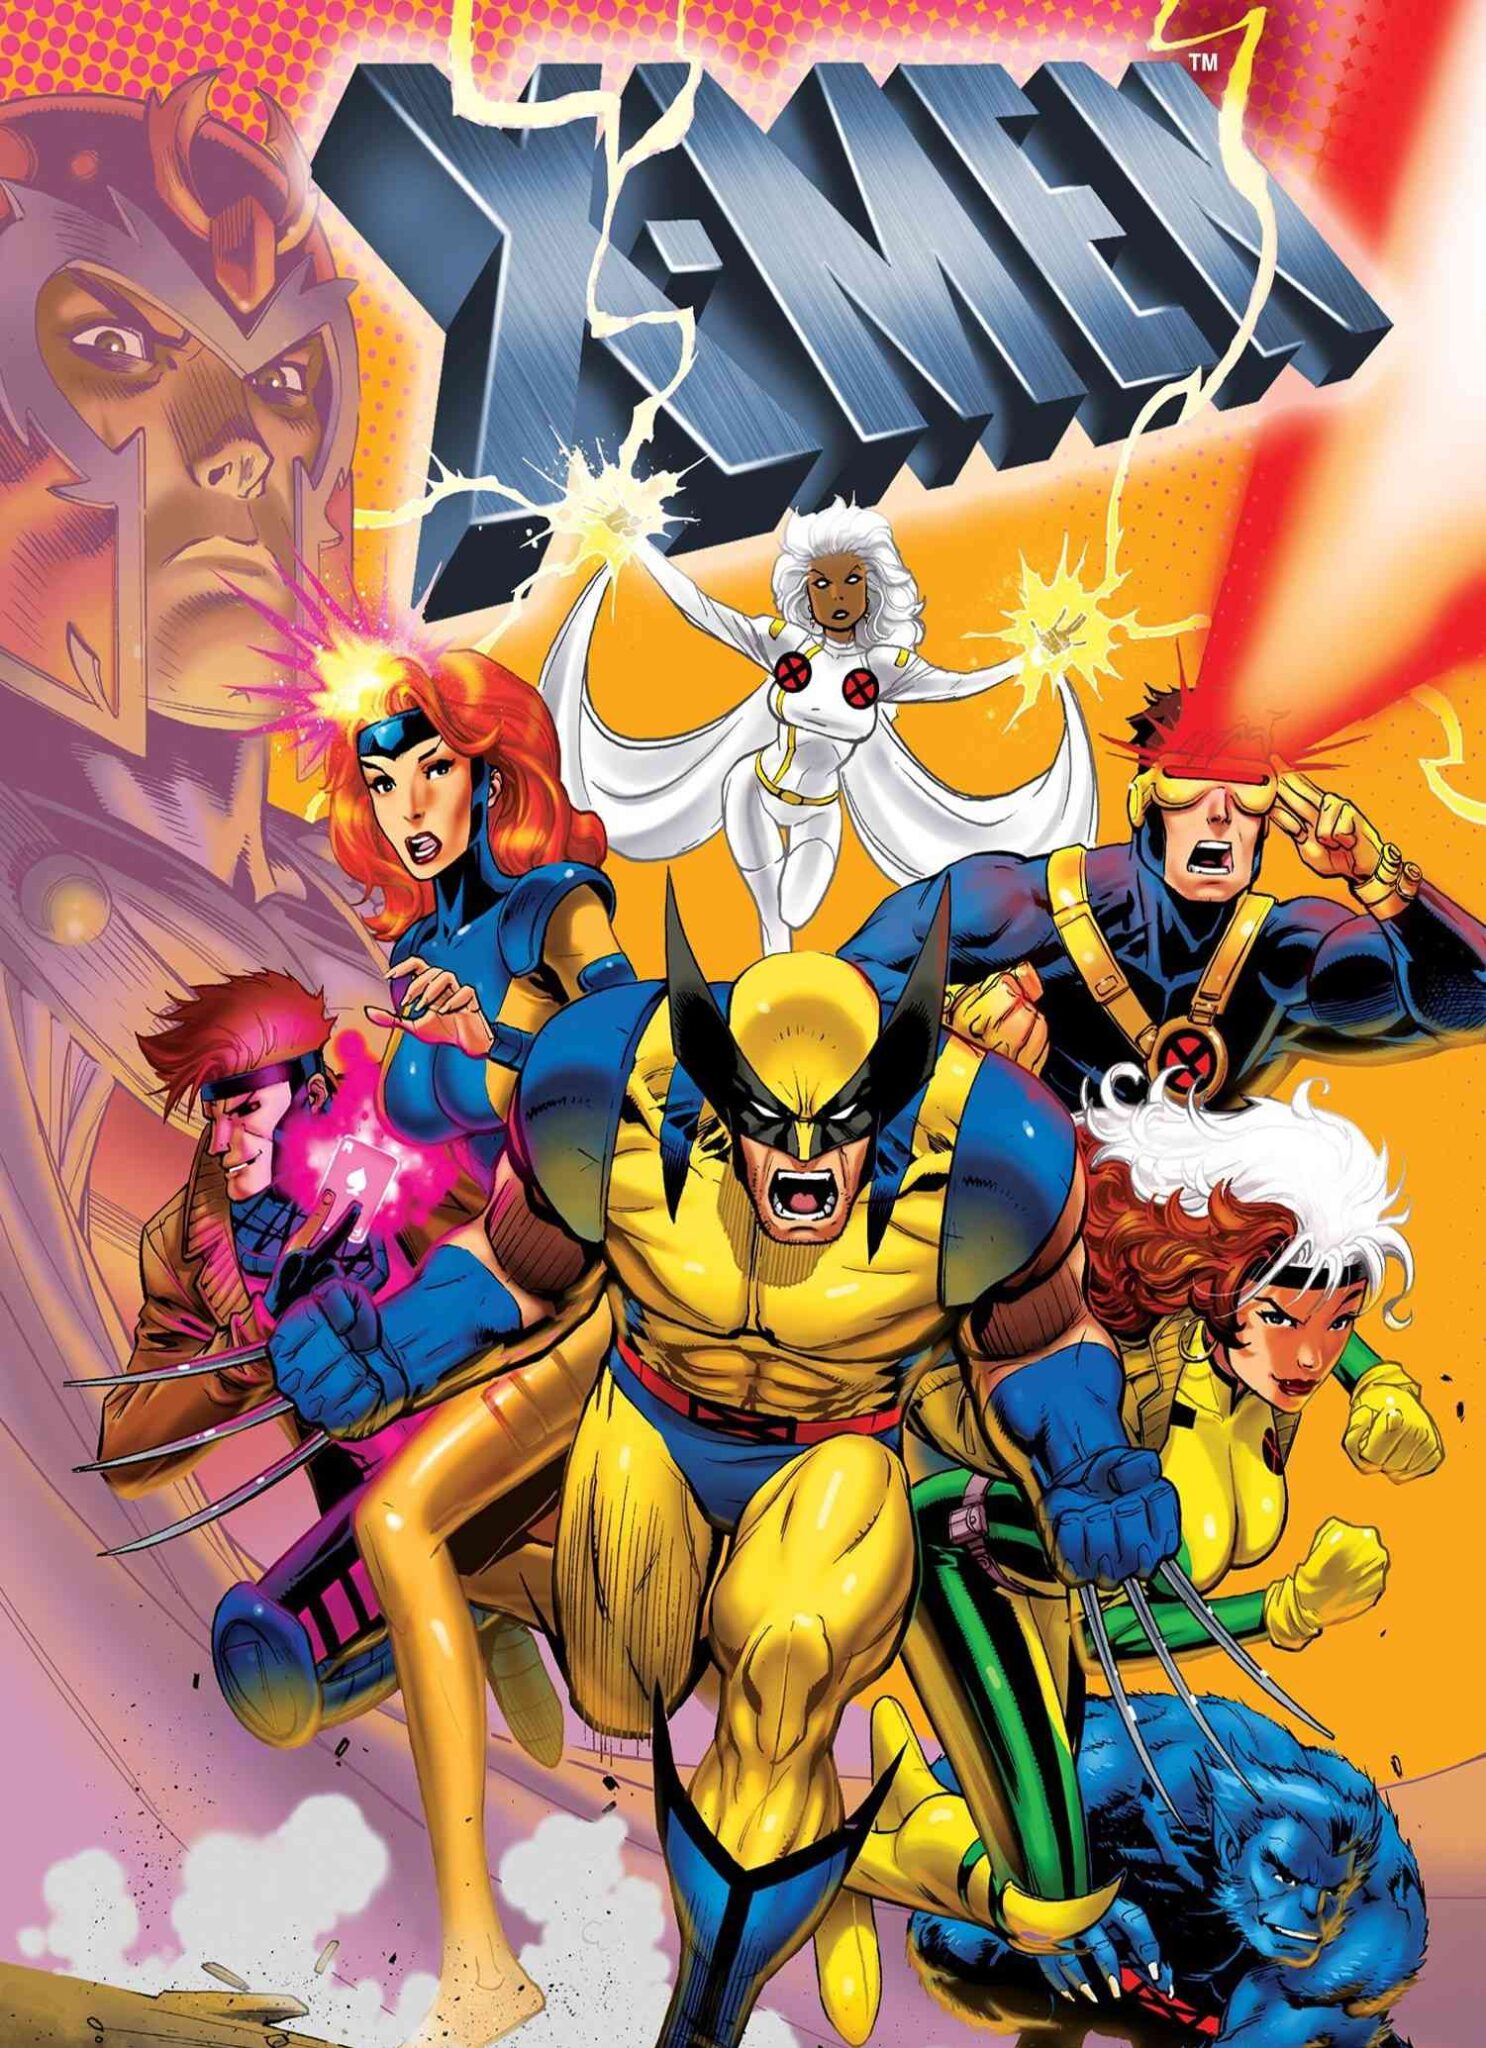 COMPLETE SEASON: X-Men: The Animated Series (Season 1 – 5) [1992]